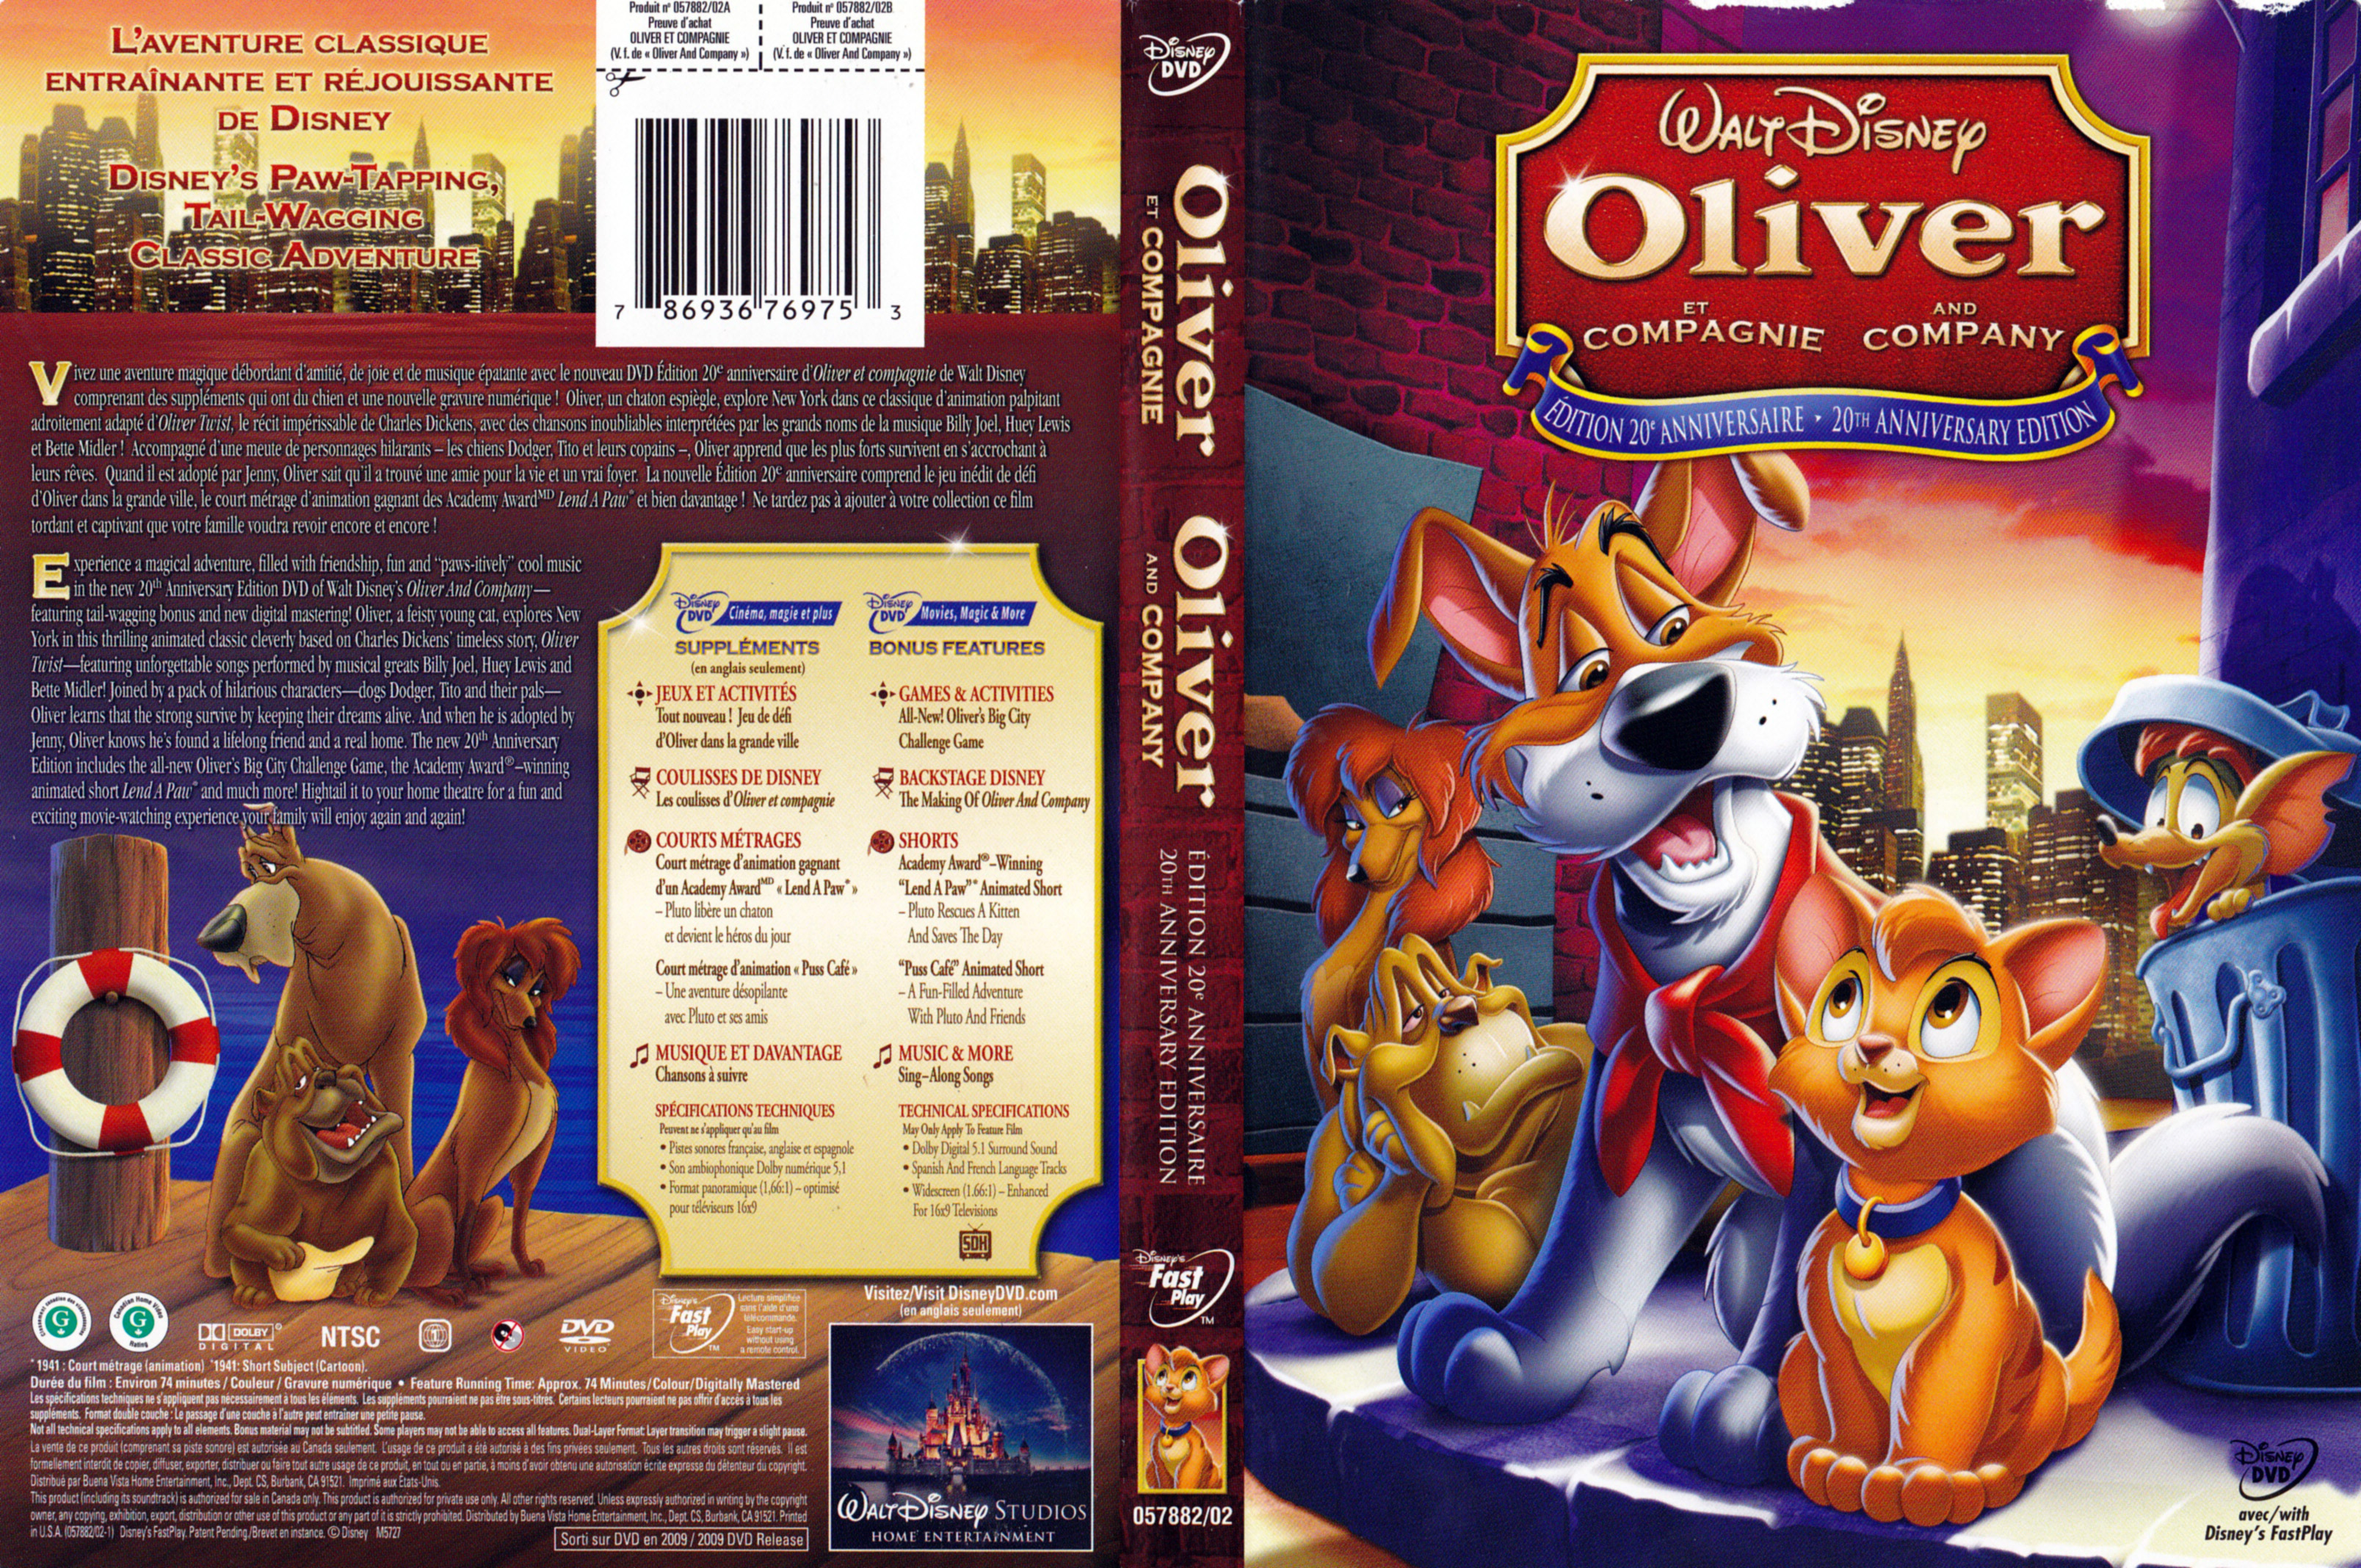 Jaquette DVD Oliver et compagnie (Canadienne)